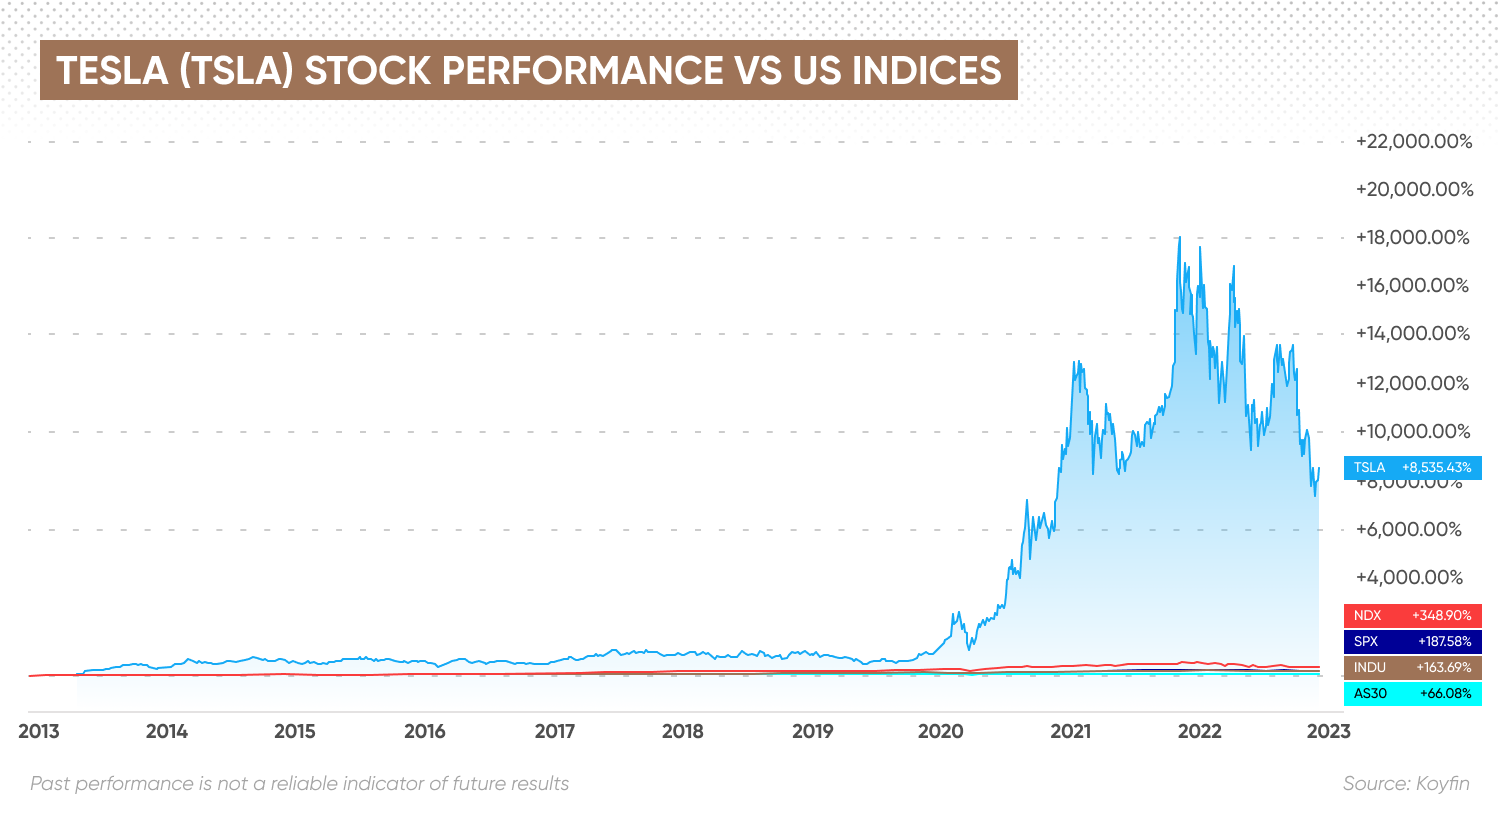 Tesla (TSLA) stock performance vs US indices